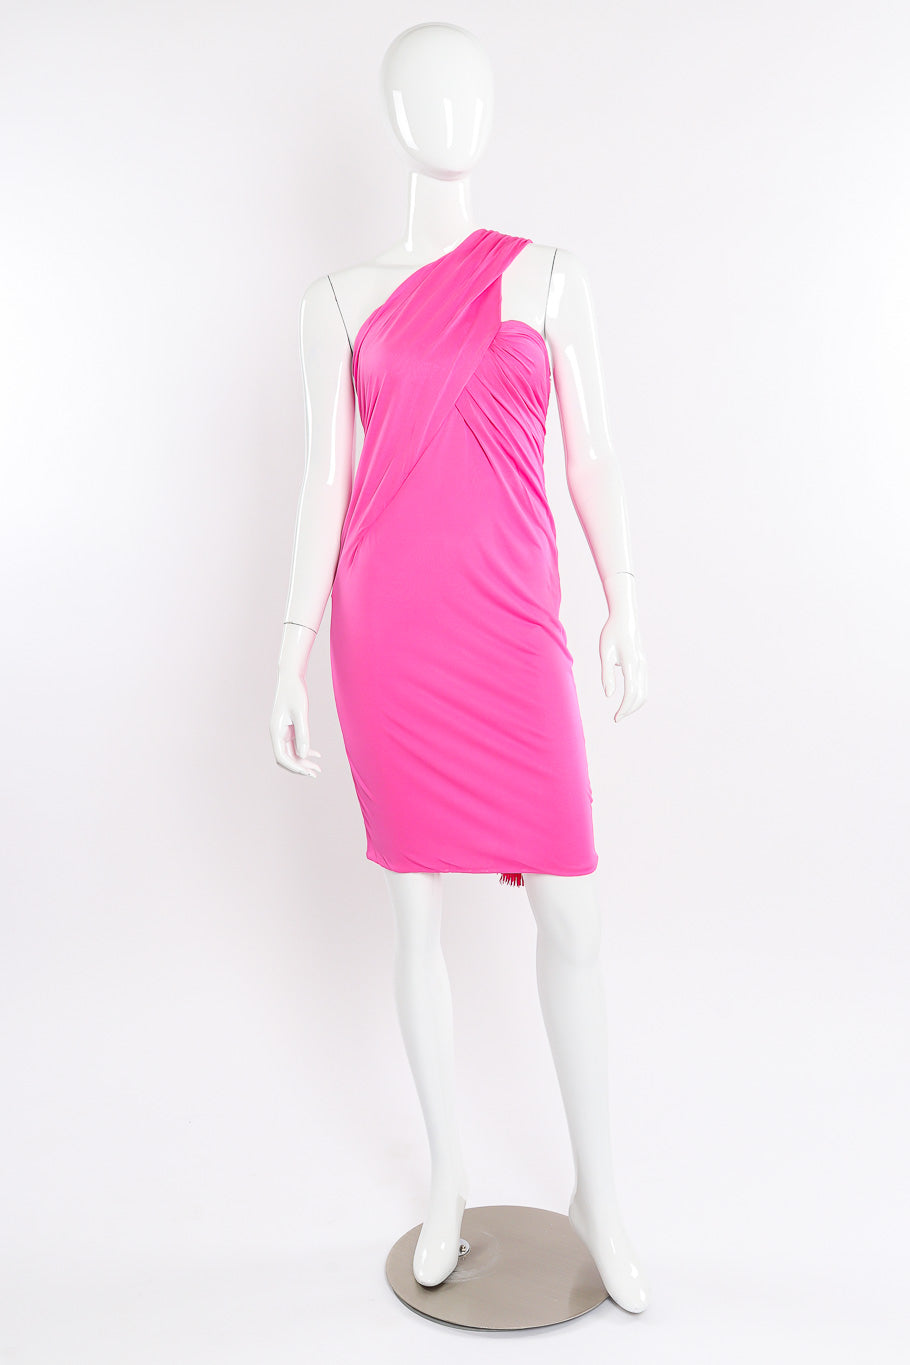 Versace Ruche One-Shoulder Dress front view on mannequin @Recessla